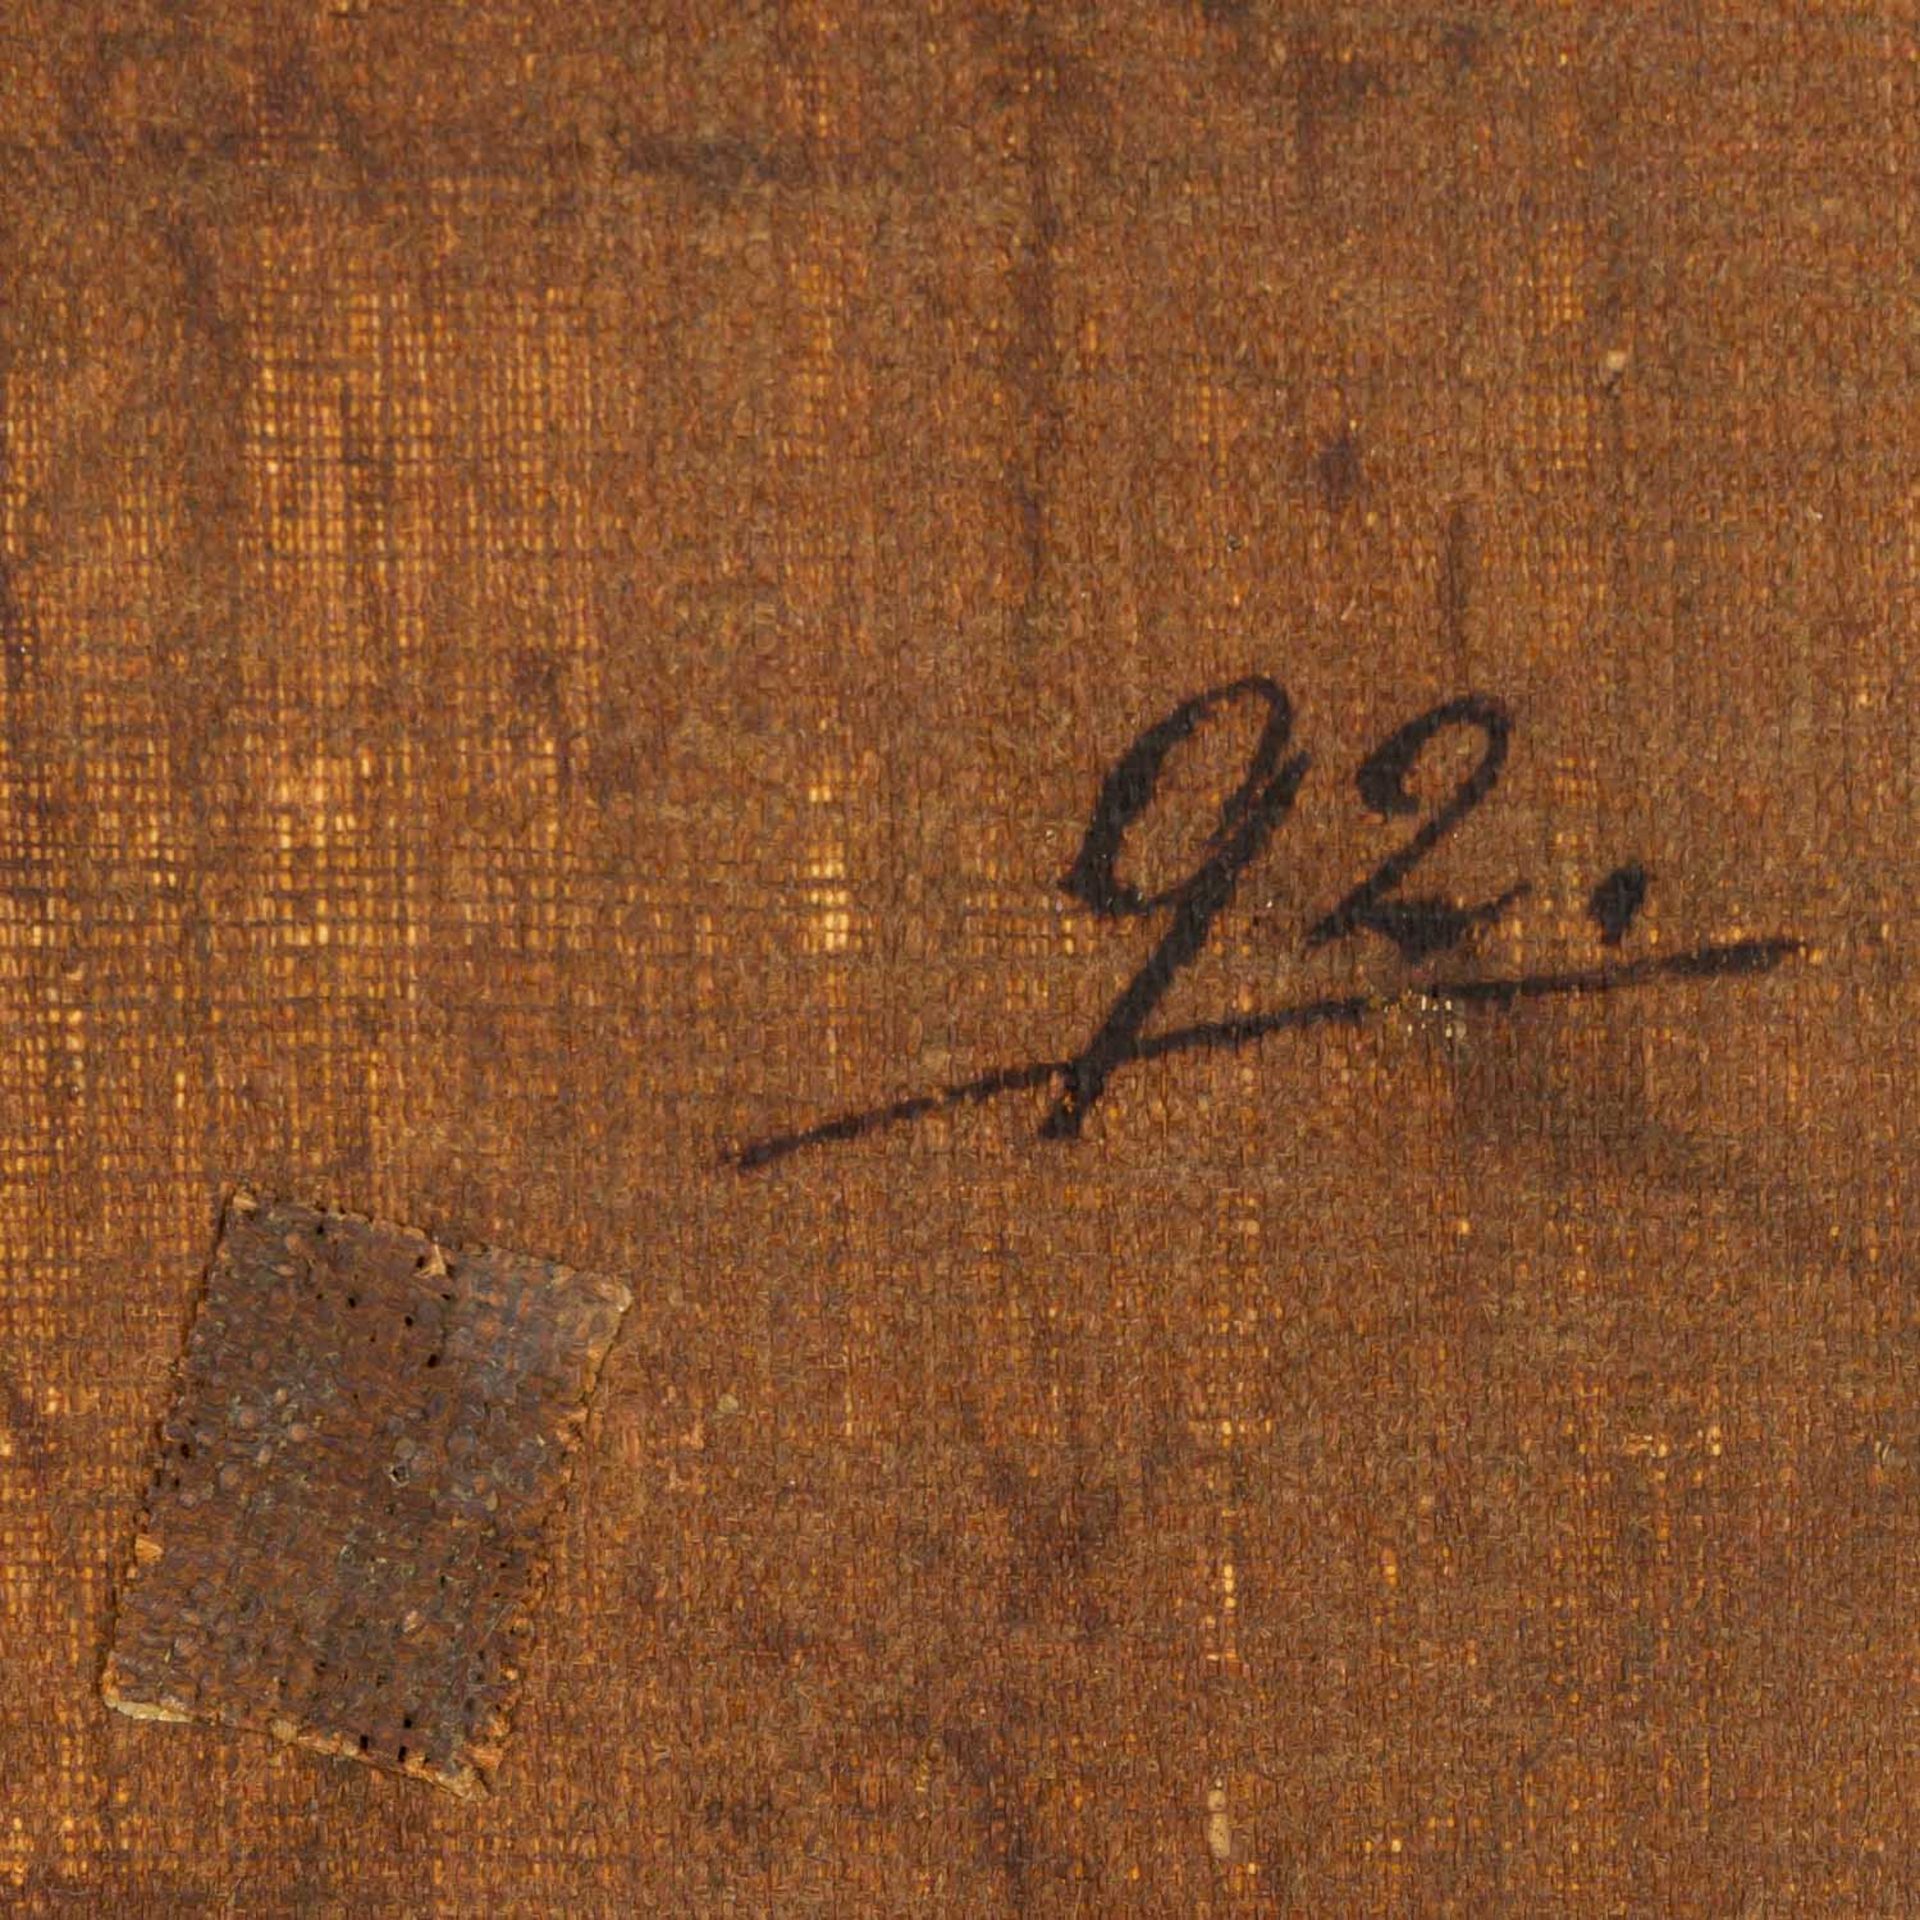 ZUGESCHRIEBEN AMERLING, FRIEDRICH RITTER VON (1803-1887), Damenbildnis, - Image 7 of 10